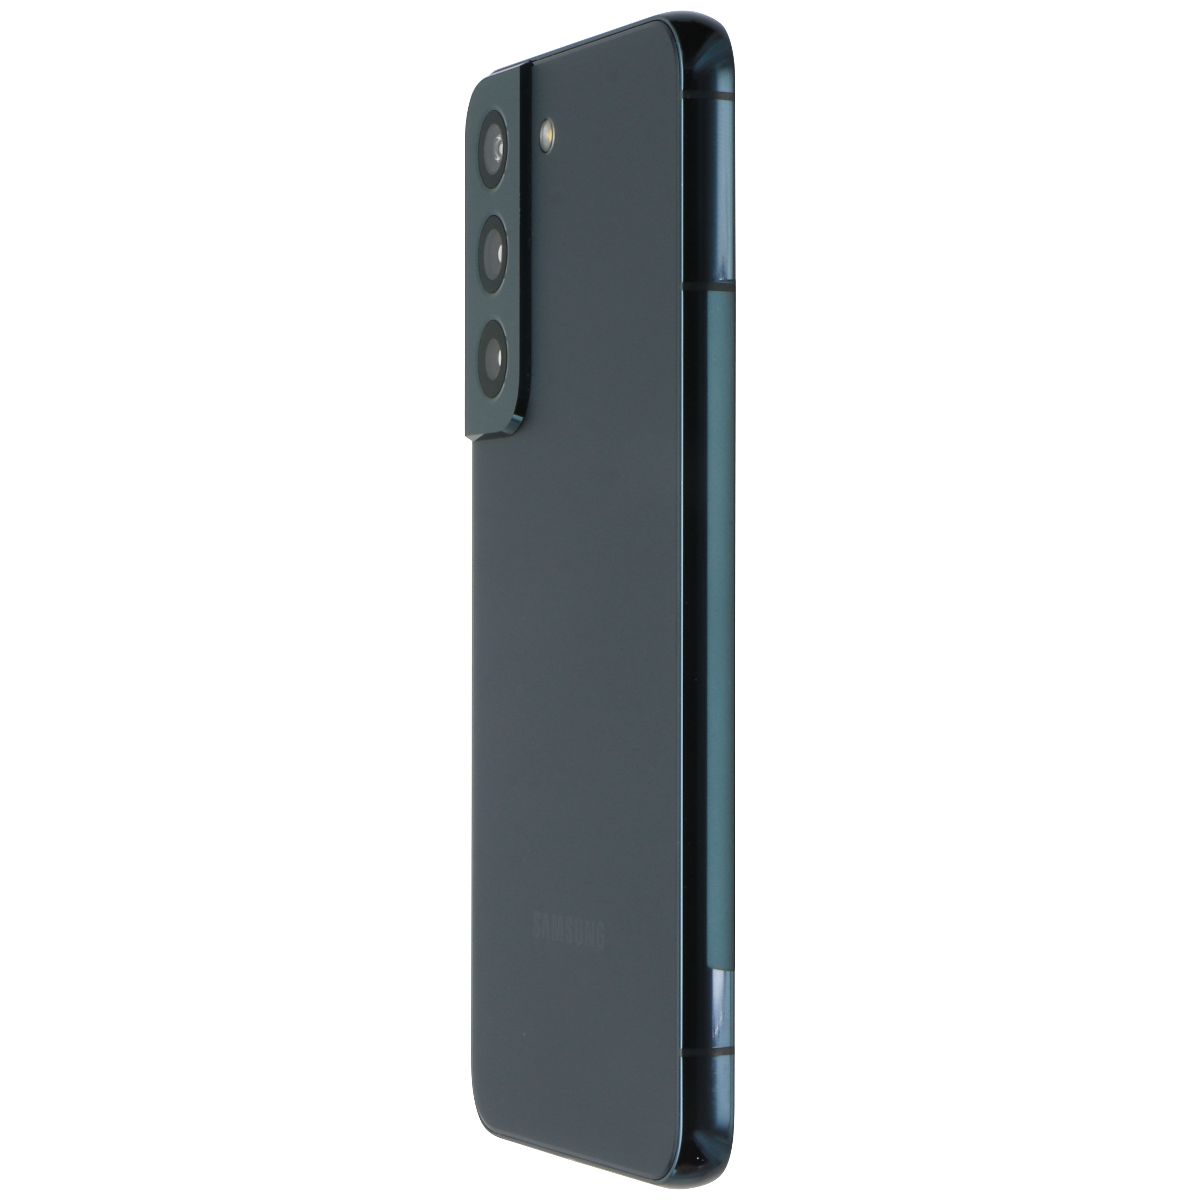 Samsung Galaxy S22 5G (6.1-inch) (SM-S901U) Unlocked - 128GB/Green Cell Phones & Smartphones Samsung    - Simple Cell Bulk Wholesale Pricing - USA Seller